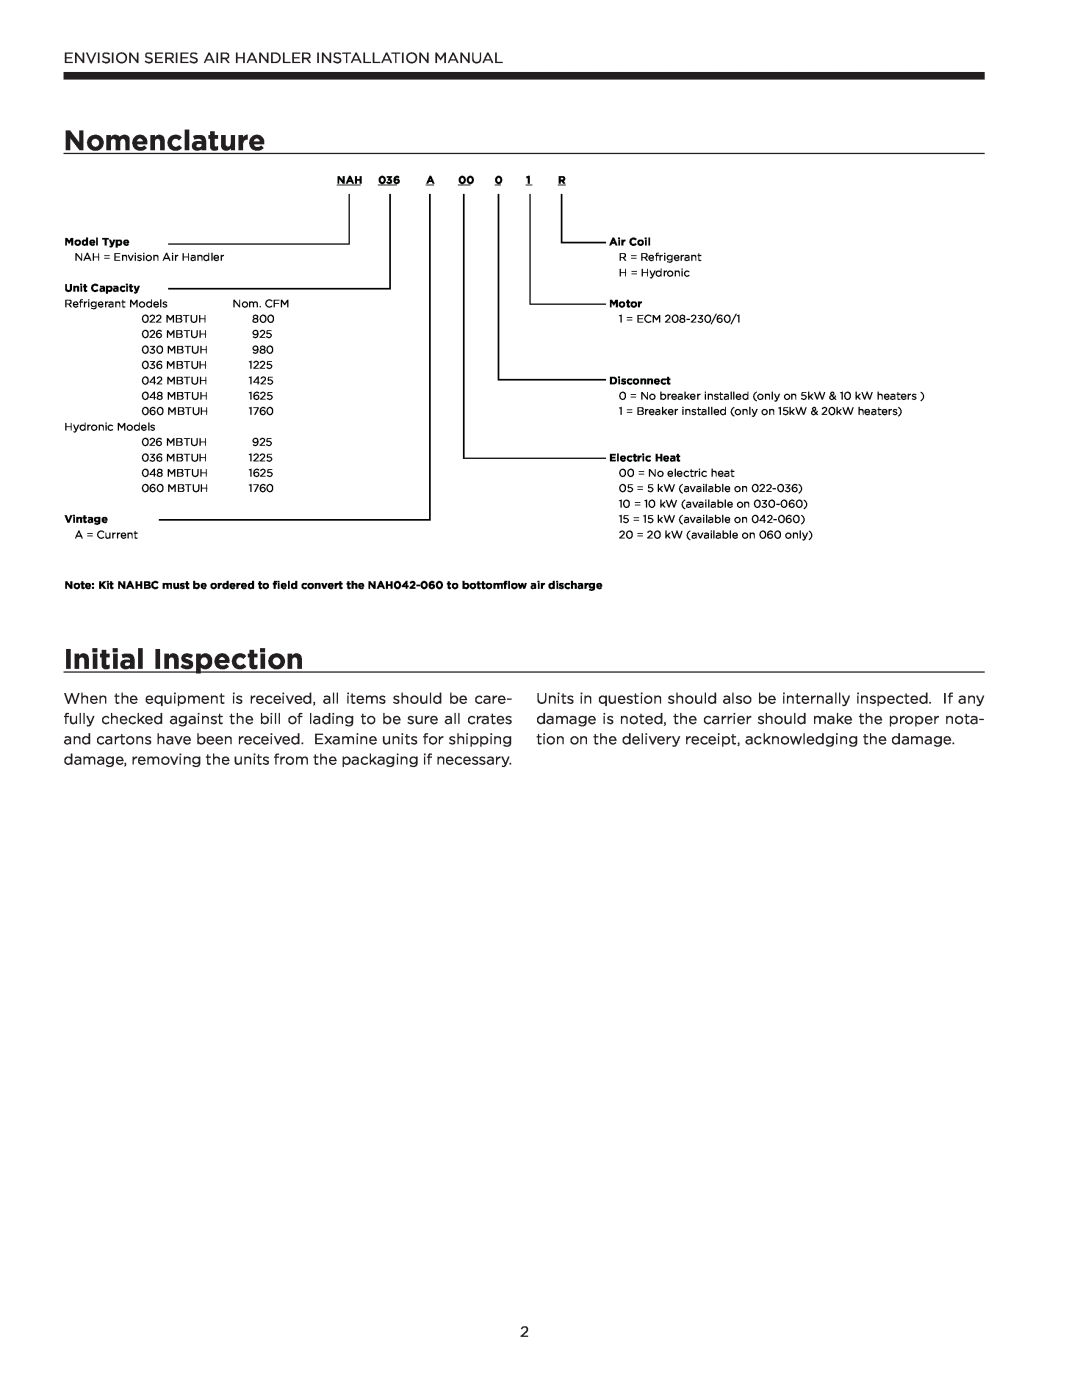 Envision Peripherals IM1603 installation manual Nomenclature, Initial Inspection 